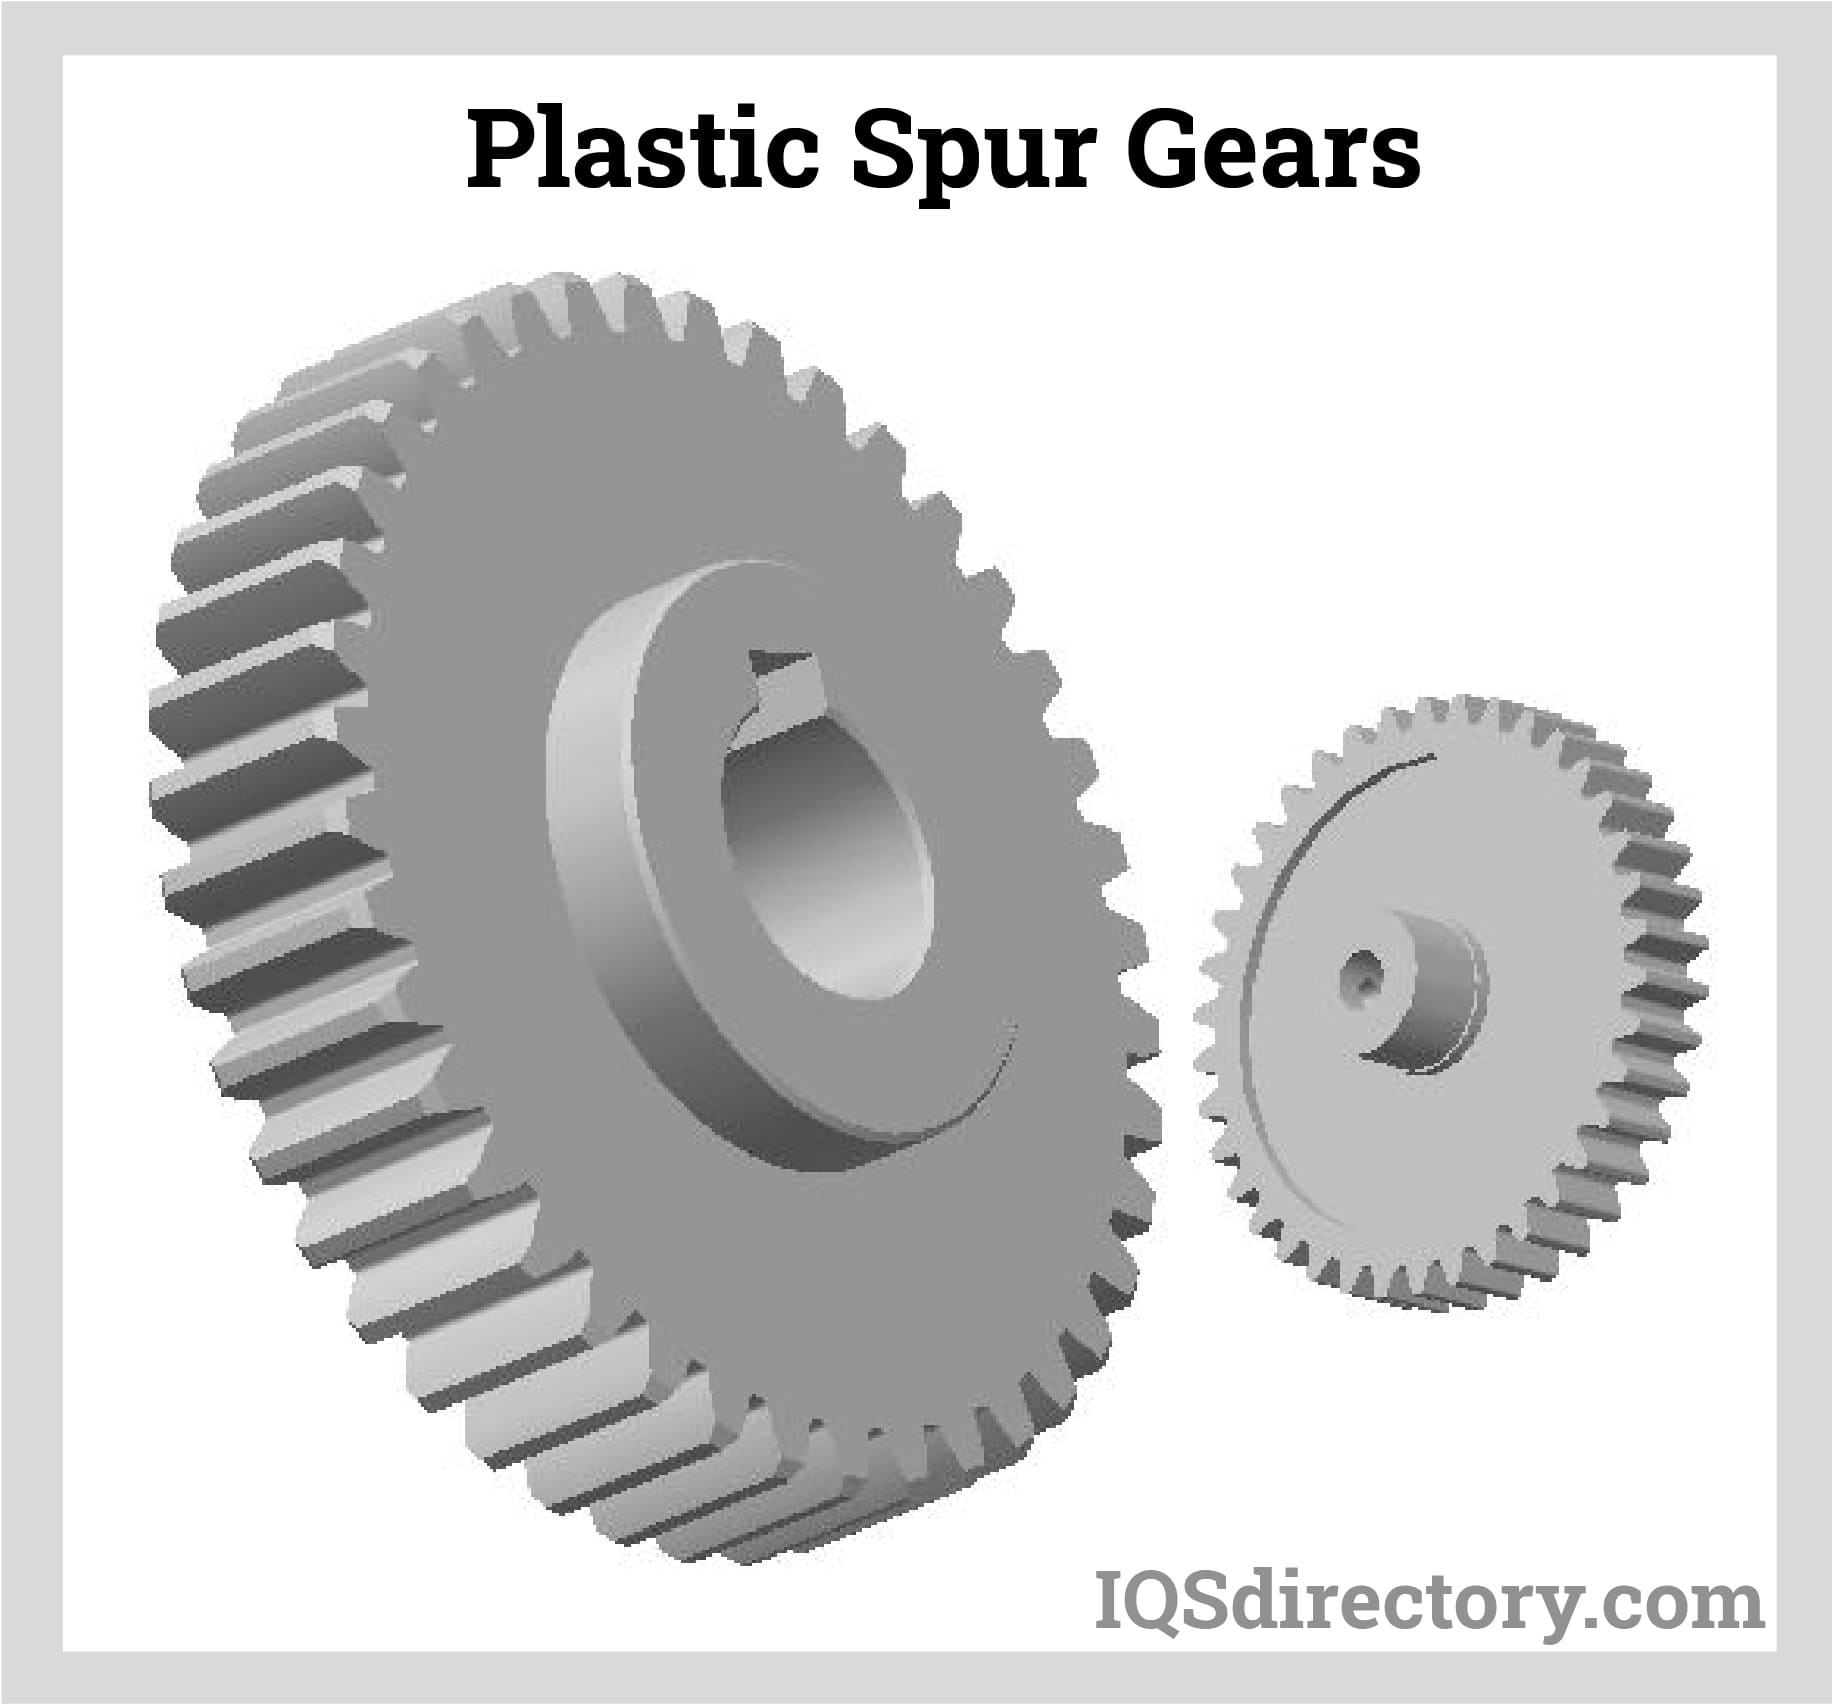 Plastic Gears: Design, Materials, Types, Advantages, and Disadvantages